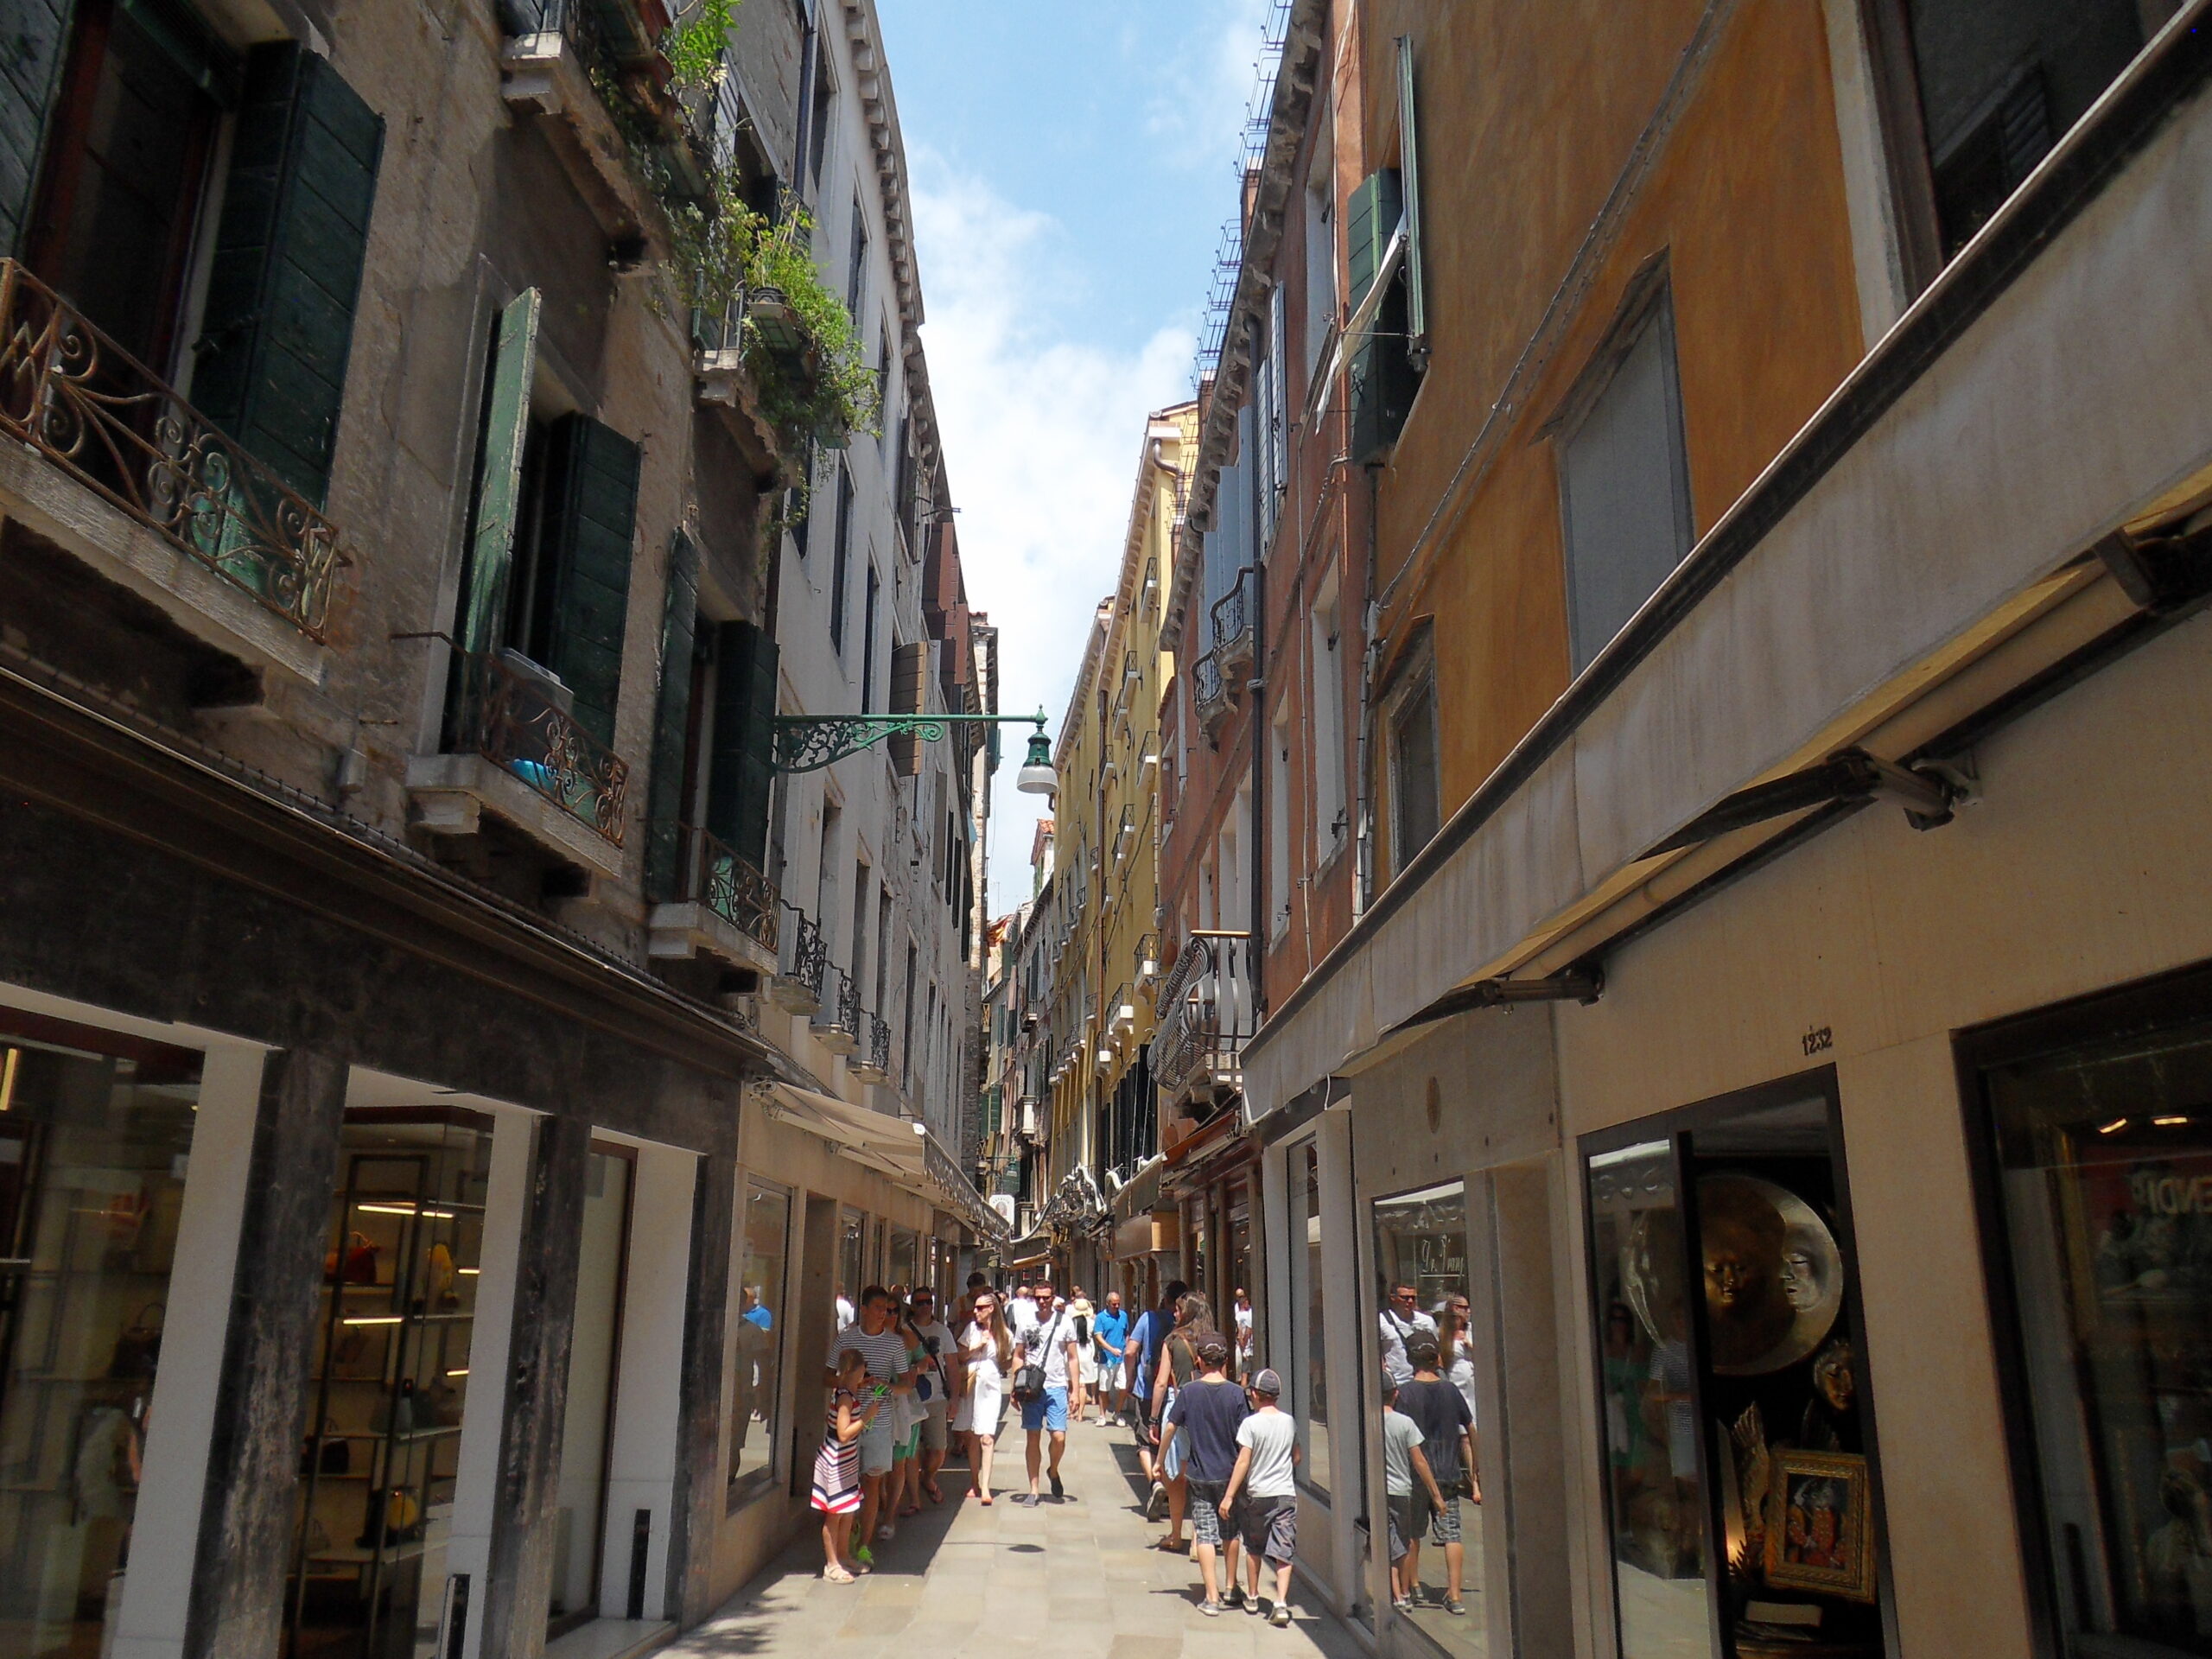 Bild: Gasse mit Menschen in Venedig, Italien